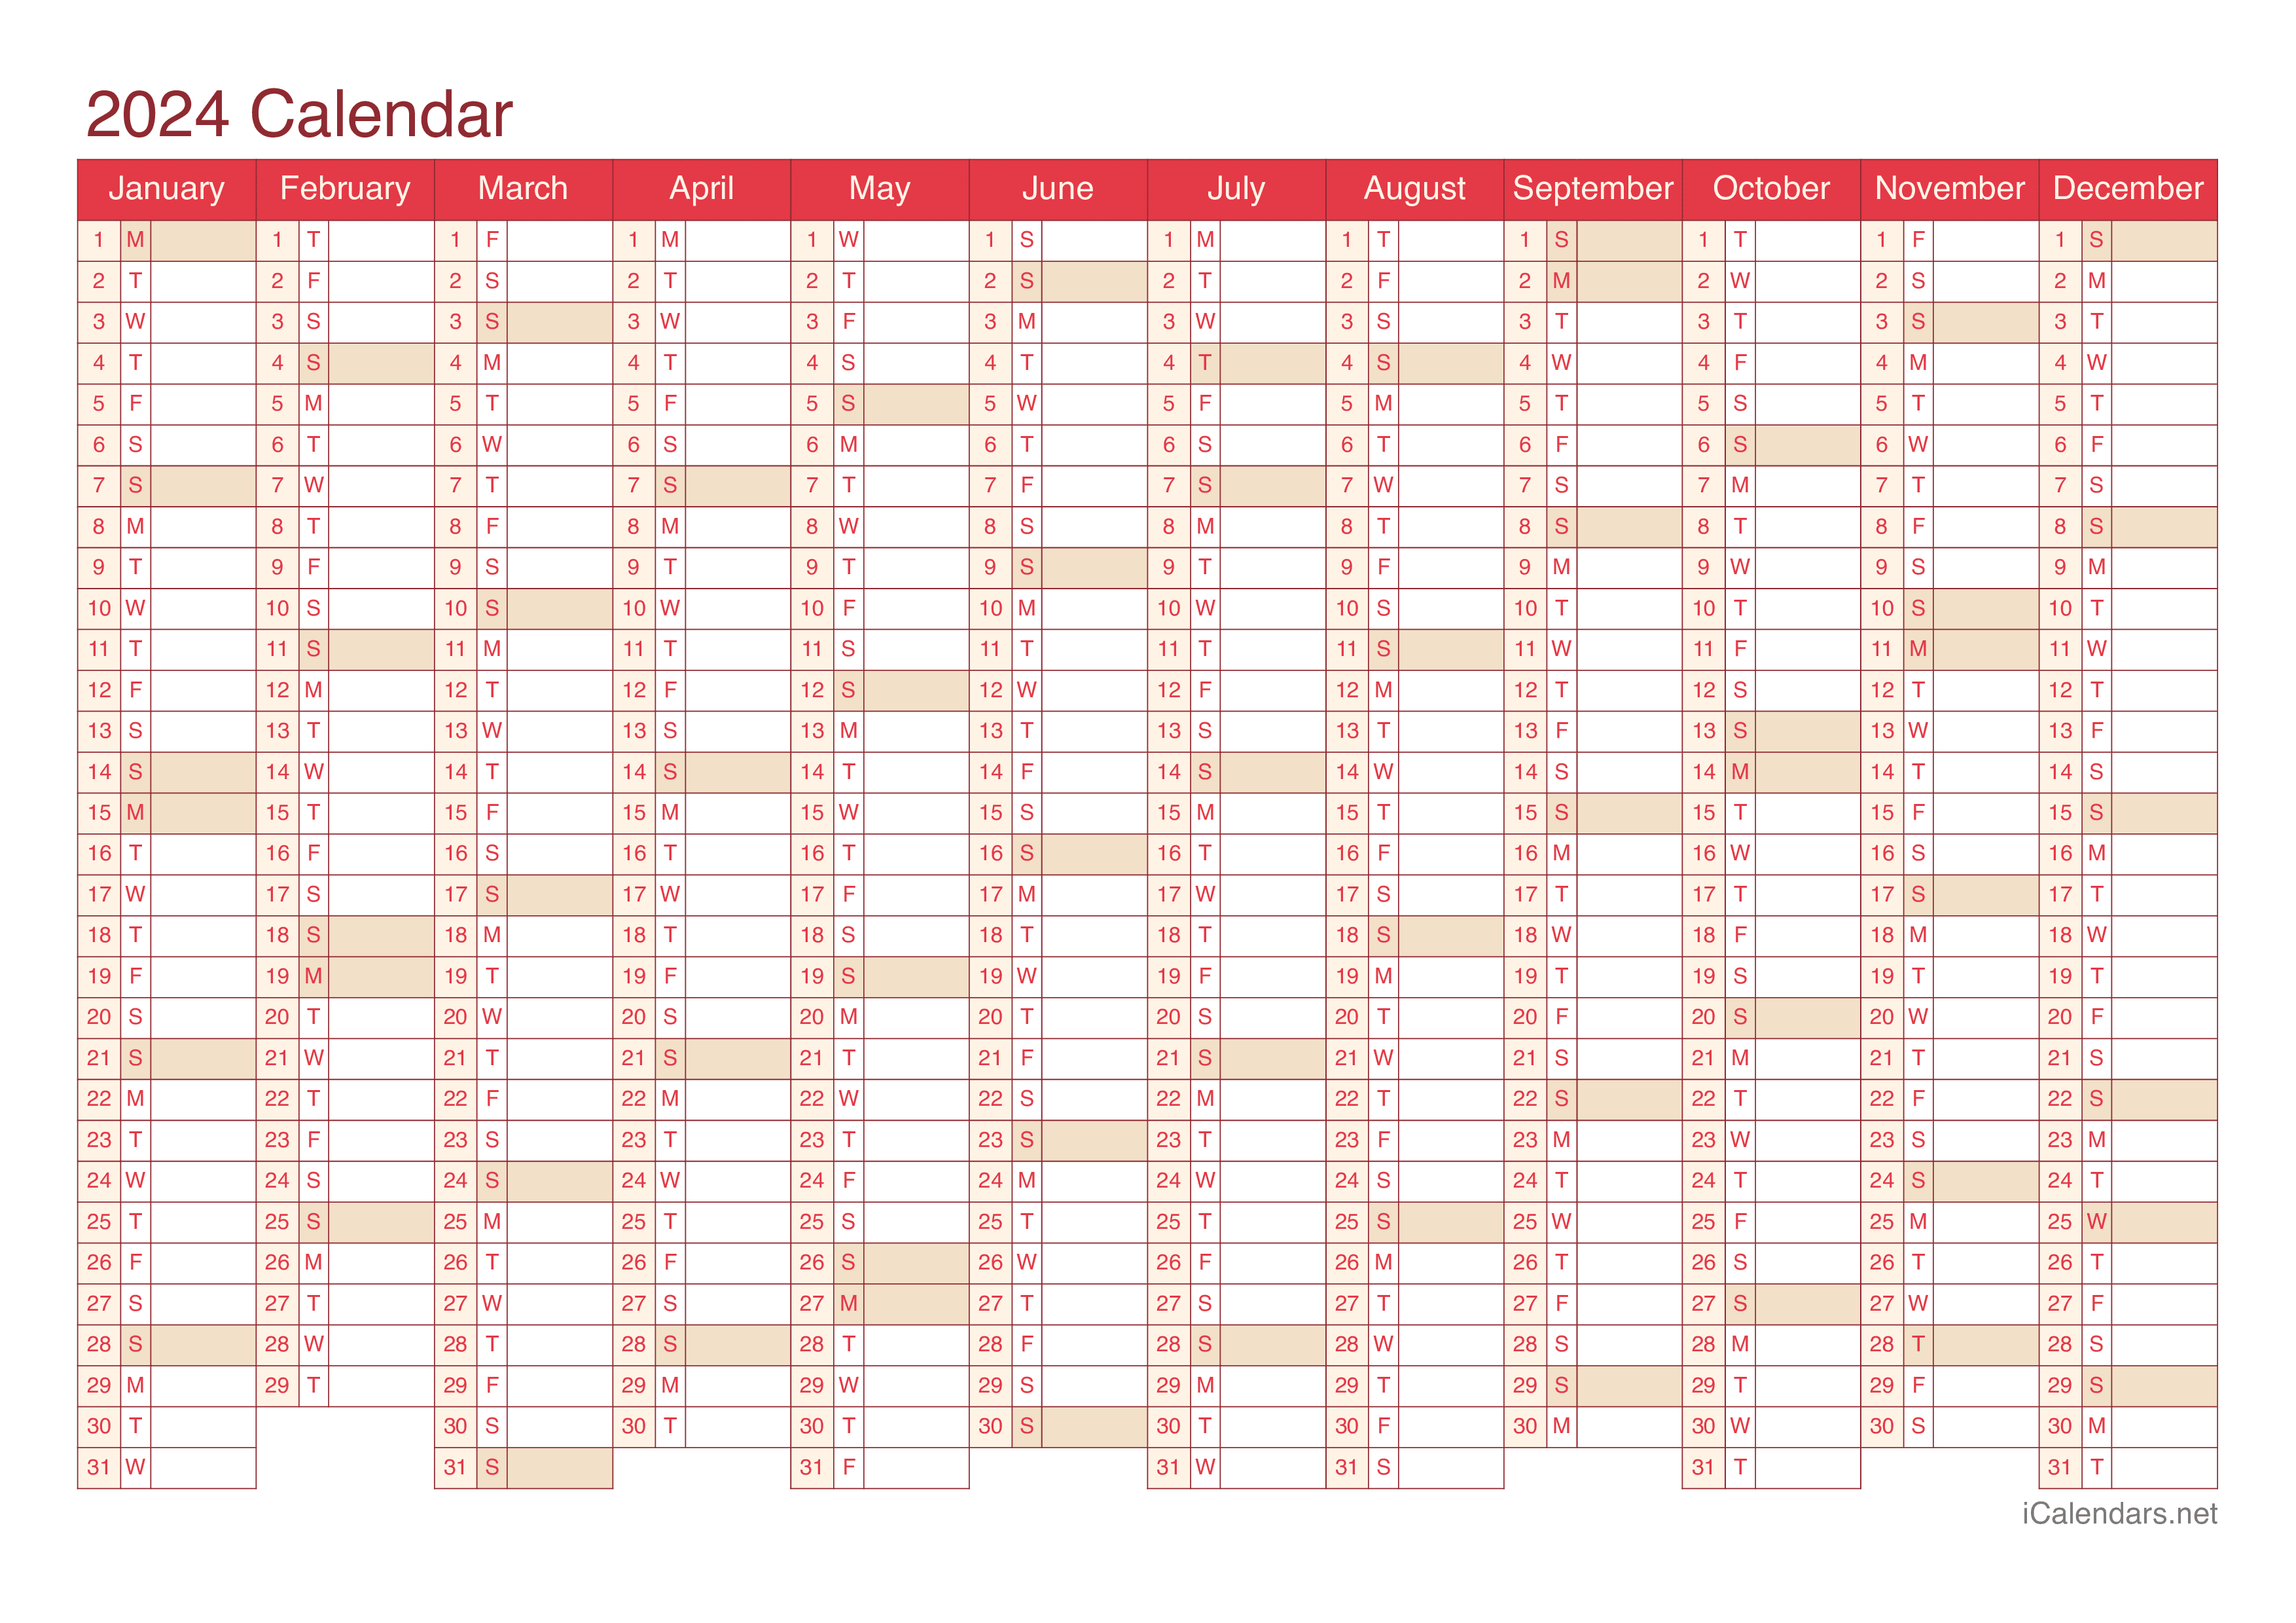 2024 Calendar - Cherry